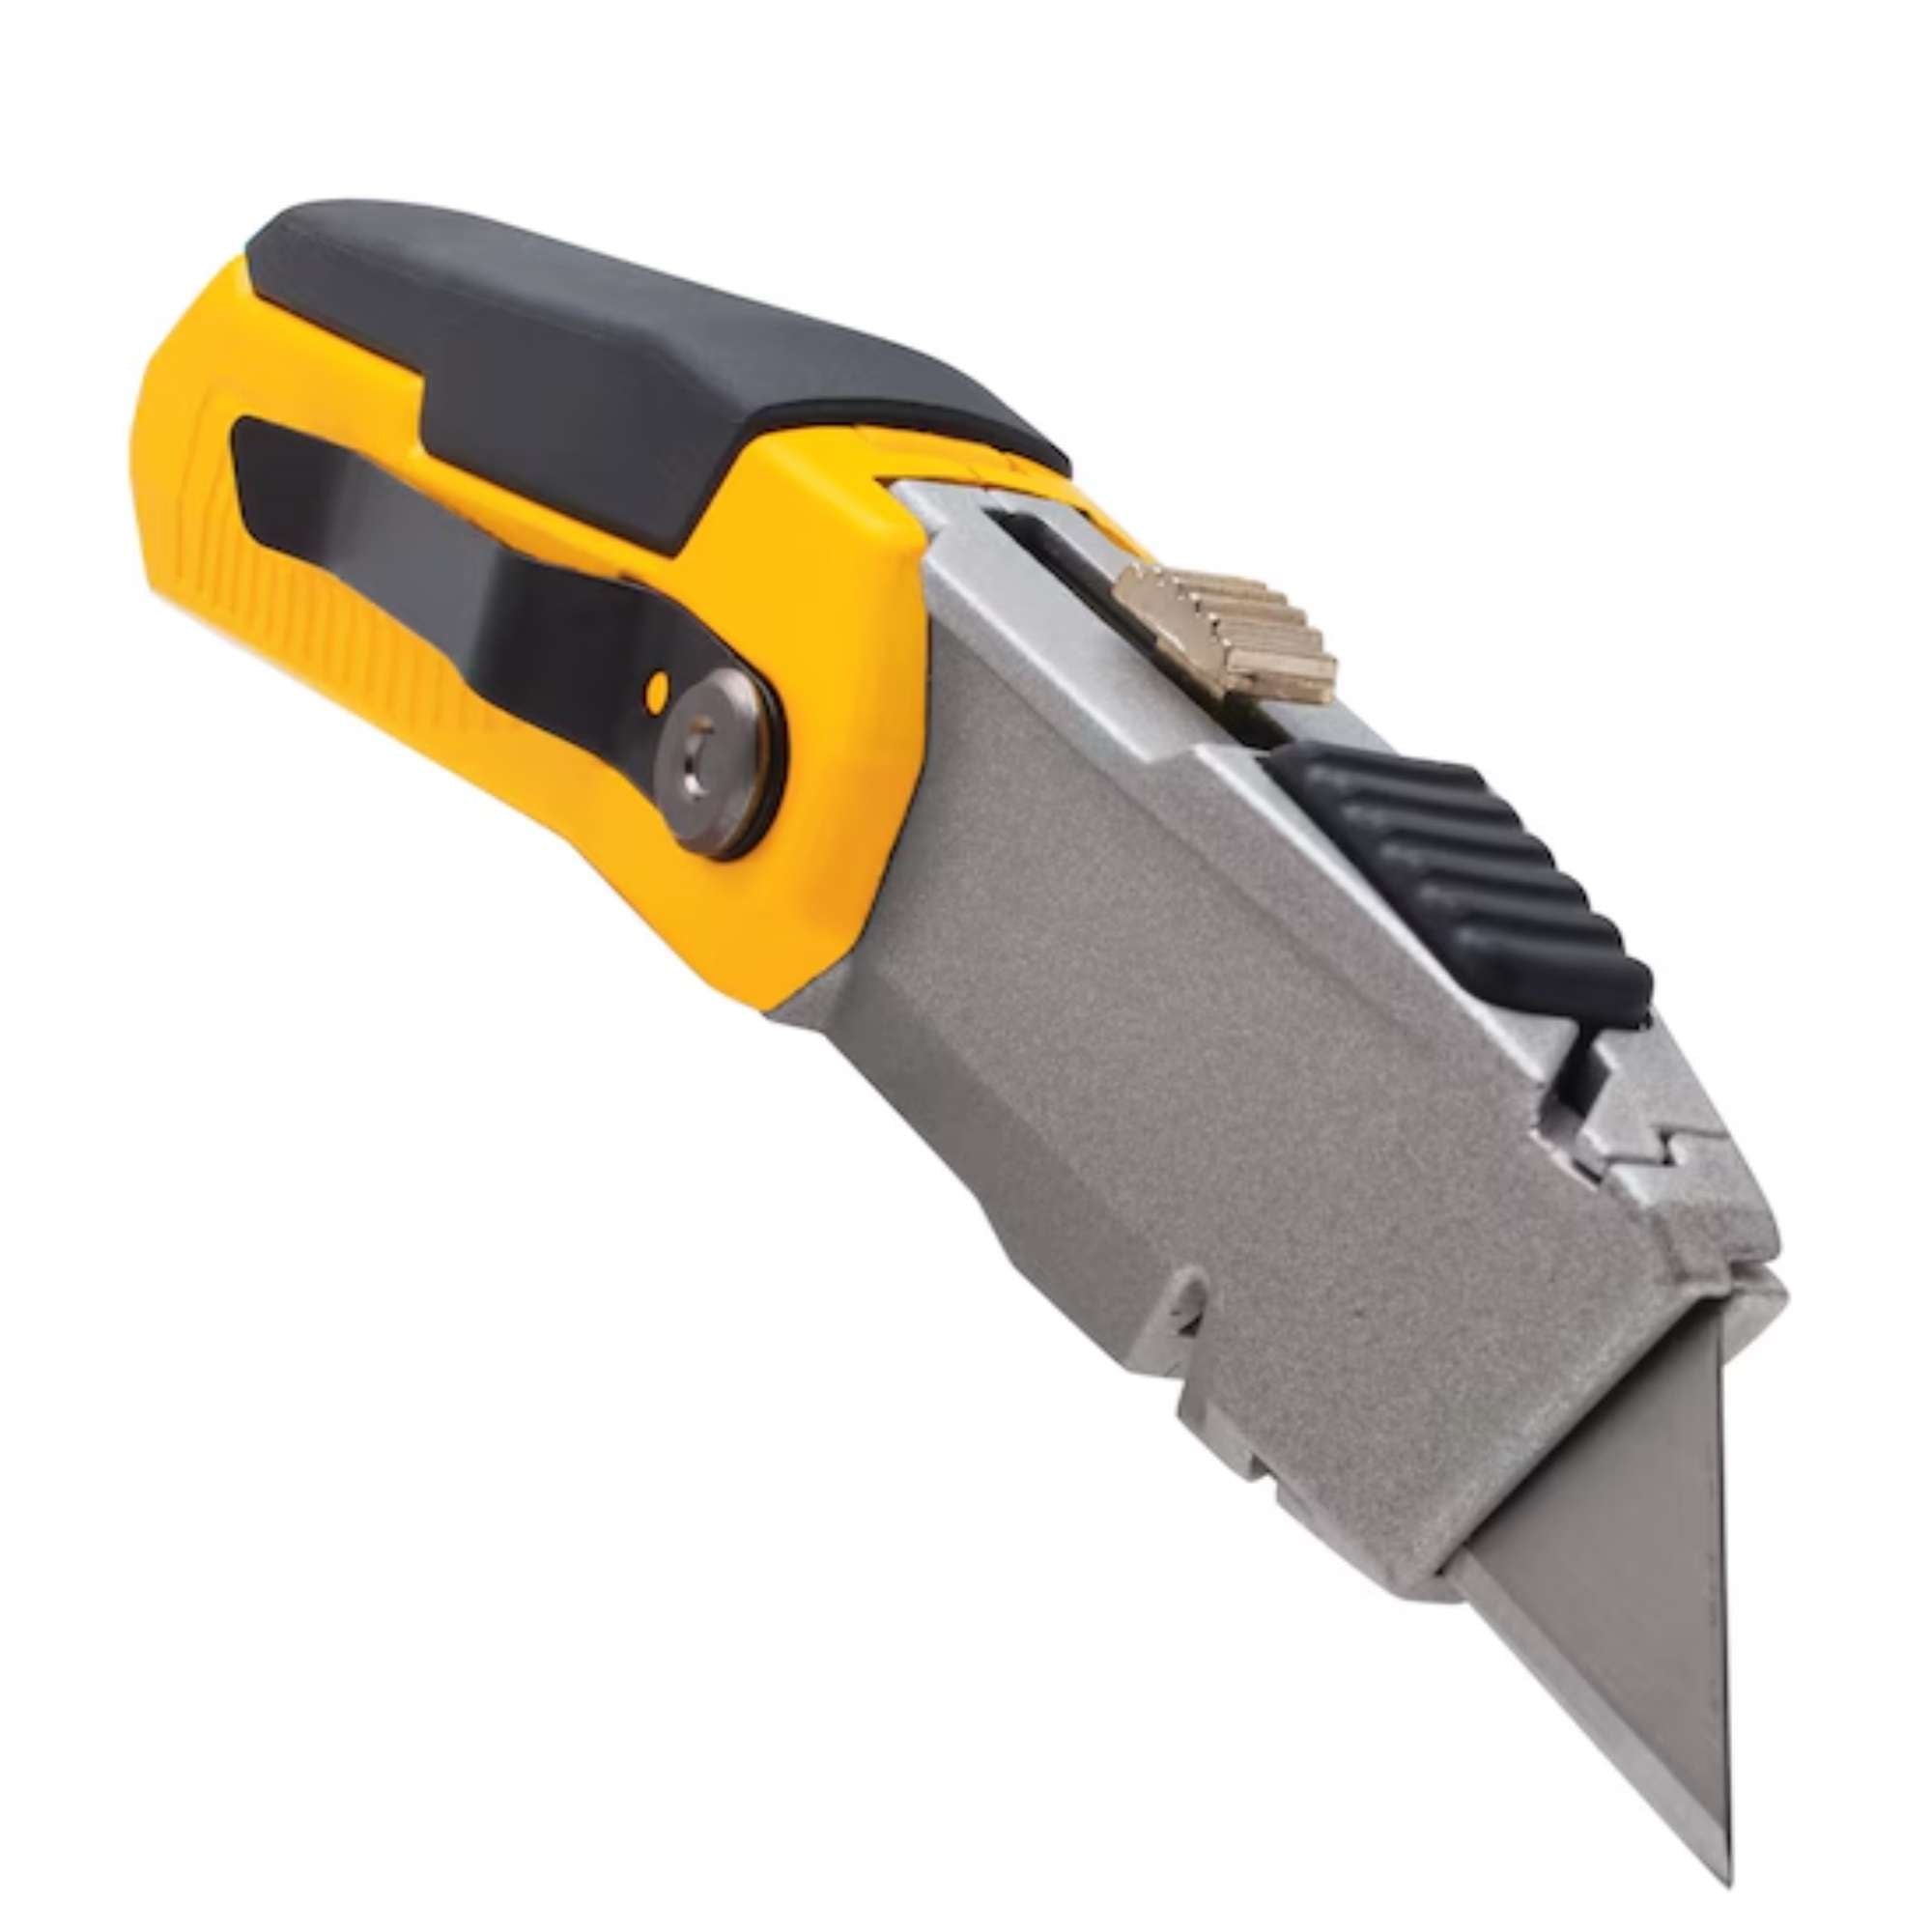 Retractable blade folding cutter with reservoir - Dewalt DWHT100350